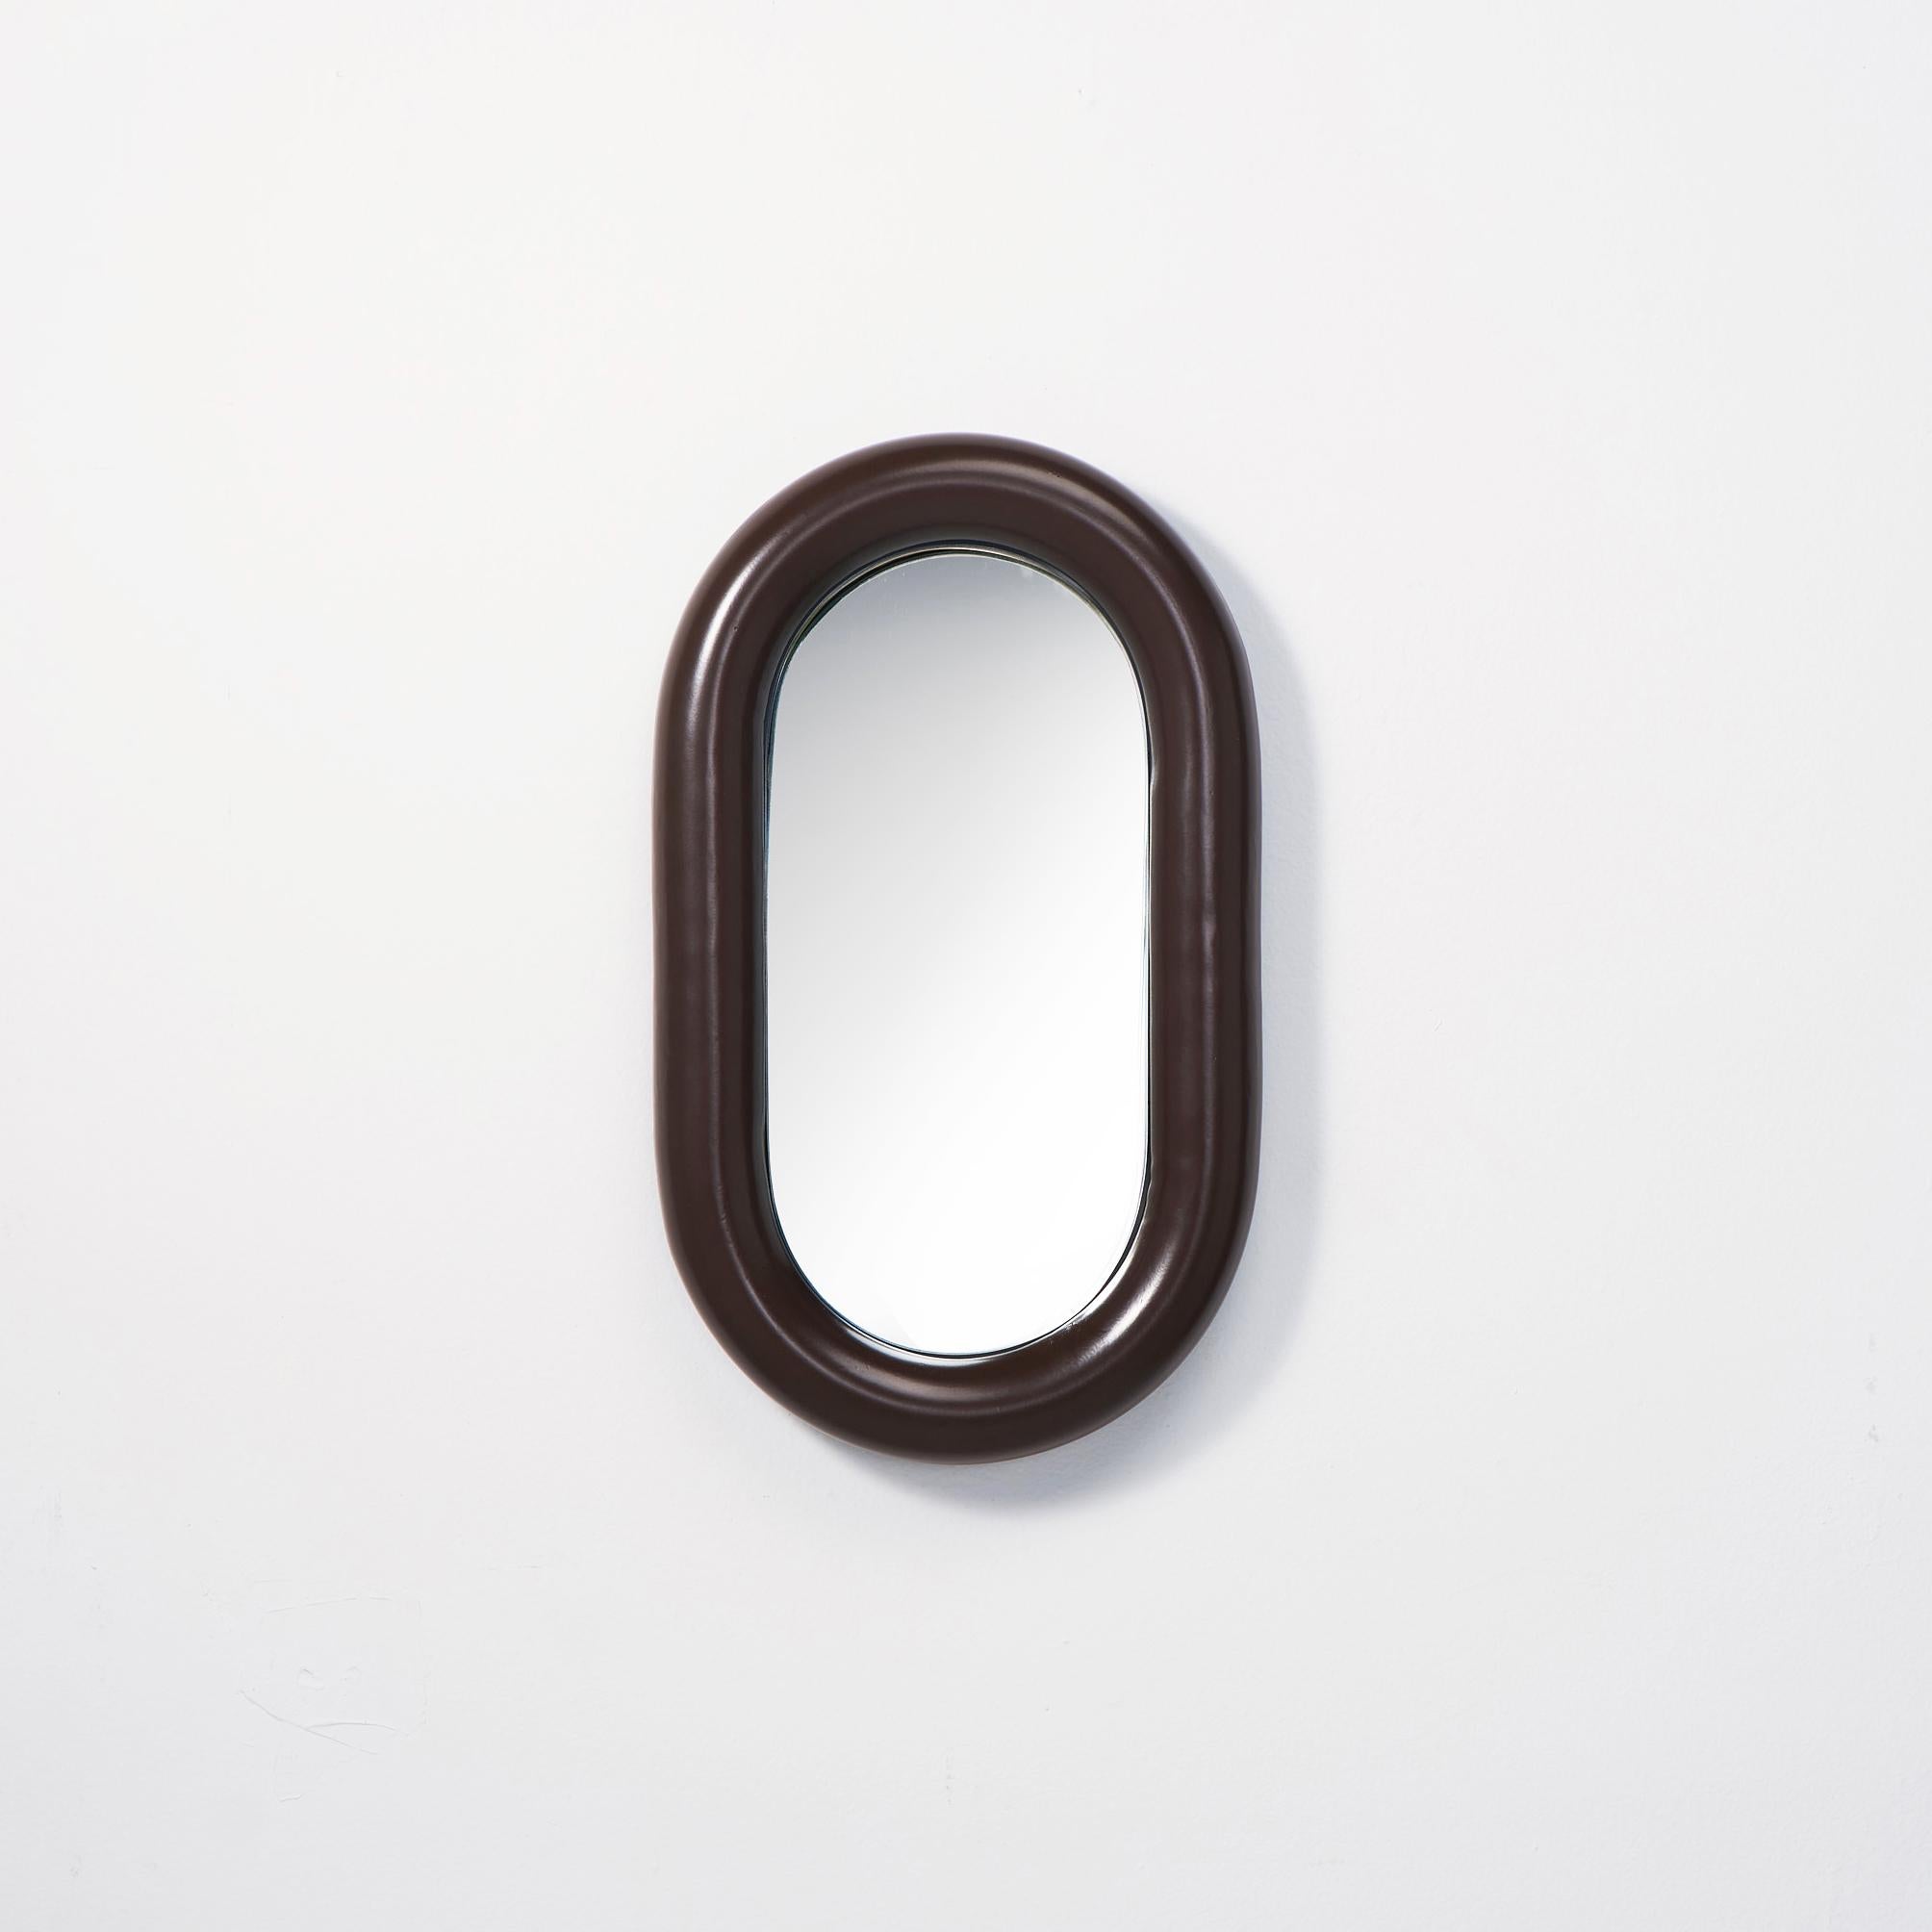 Minimalist Mirror Curva For Sale